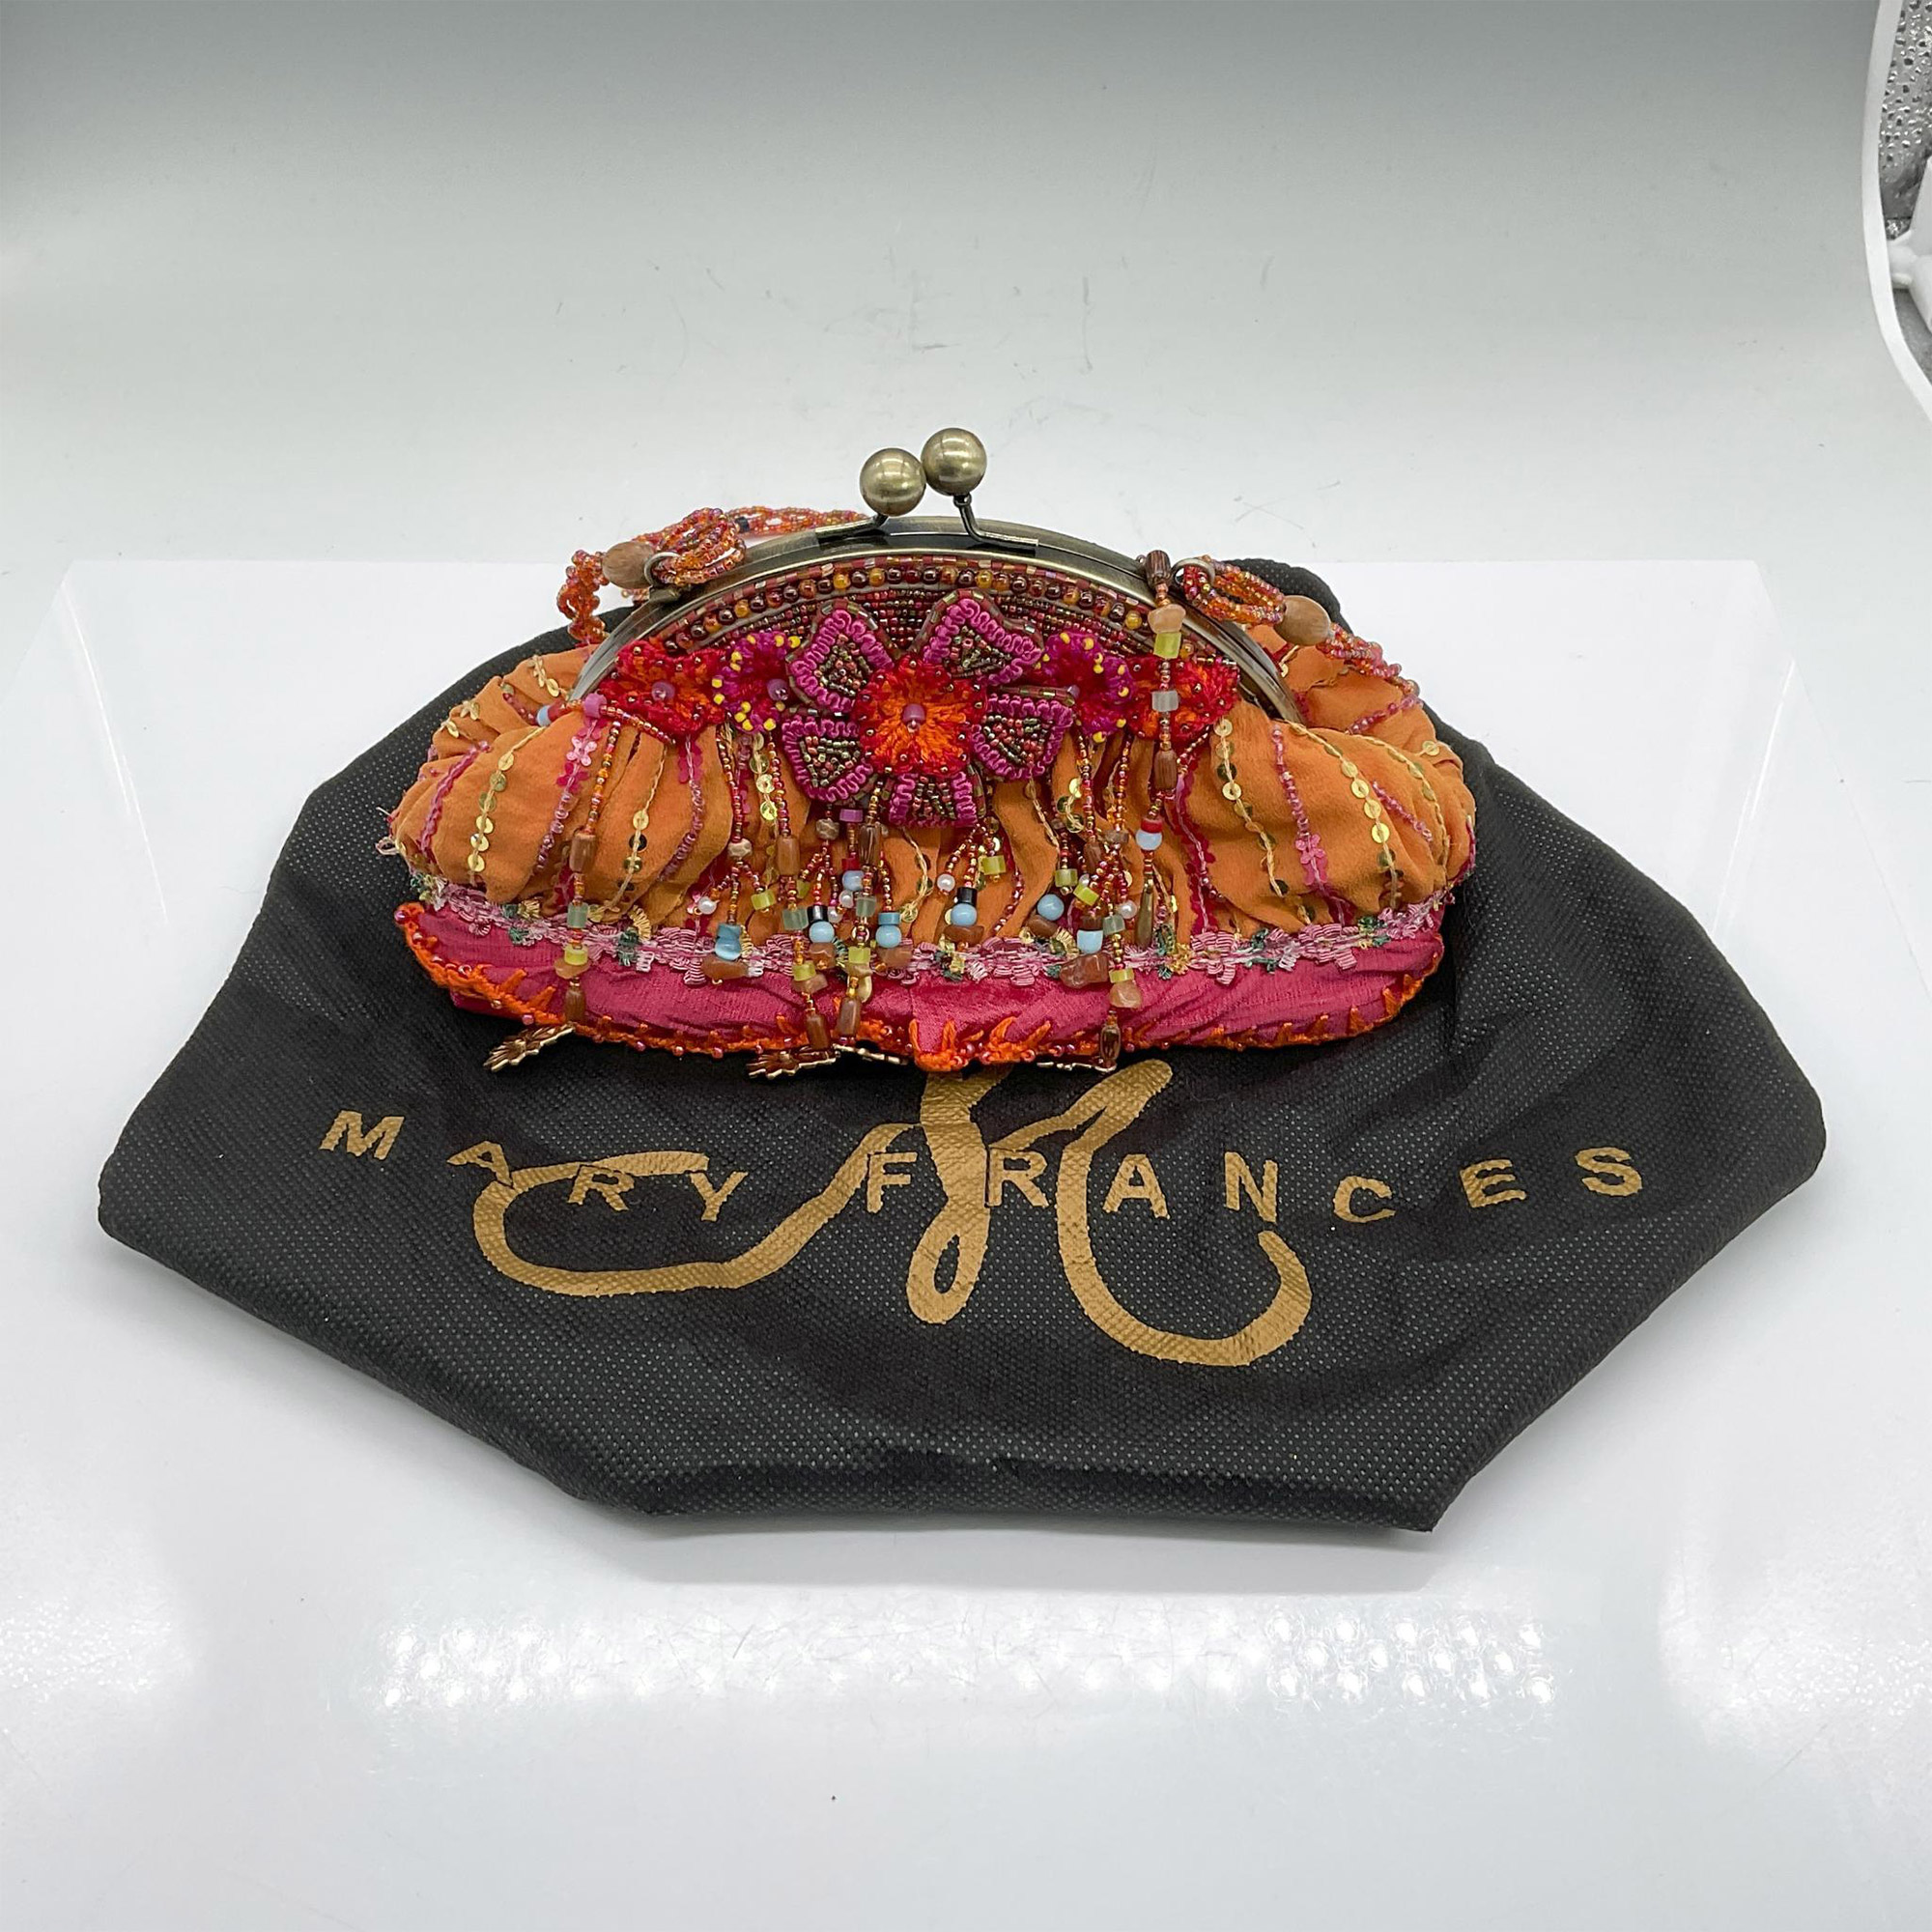 Mary Frances Satin and Silk Handbag, Orange/Fuchsia - Image 5 of 5